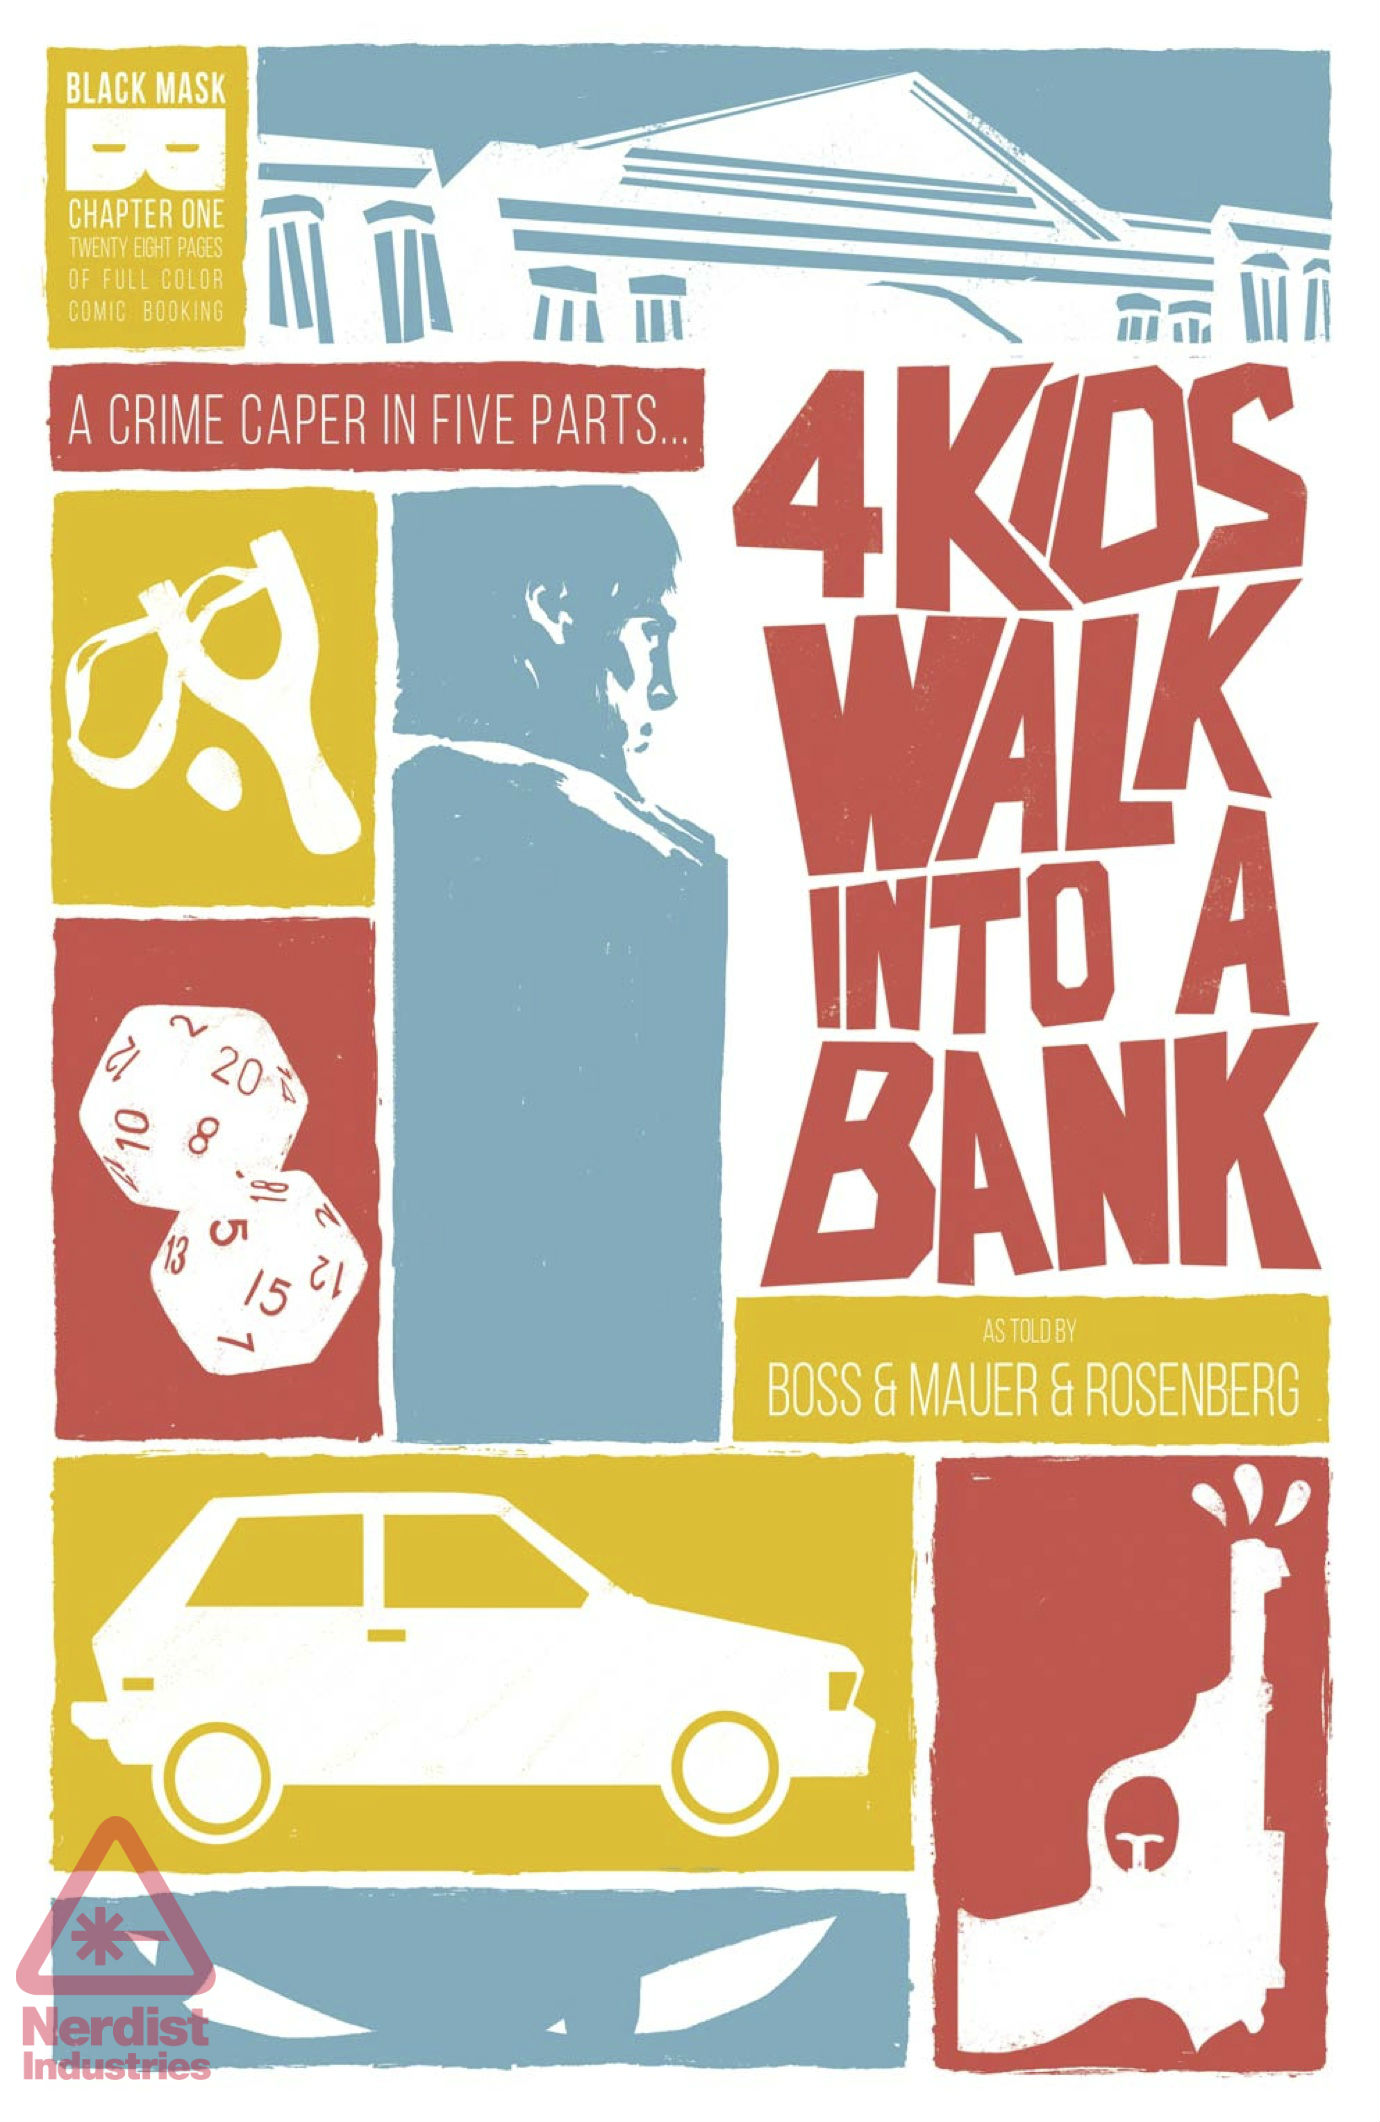 000000000000-4-kids-walk-into-bank